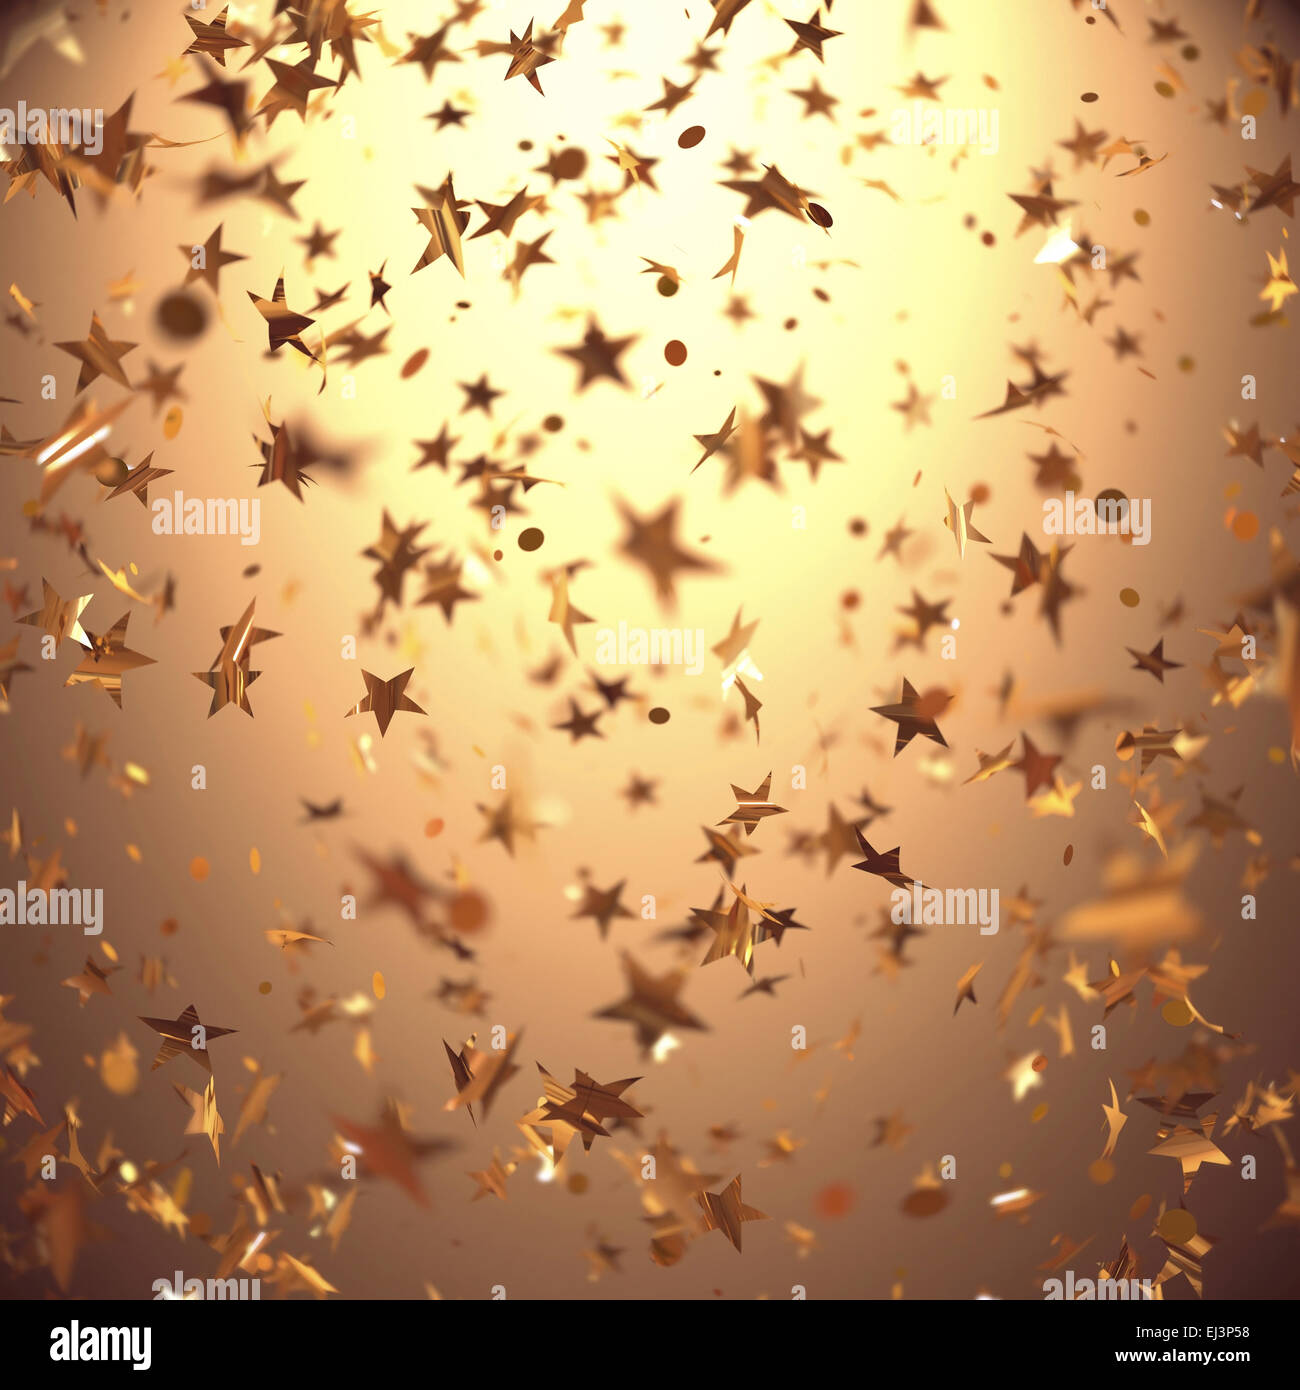 Gold stars, illustration Stock Photo